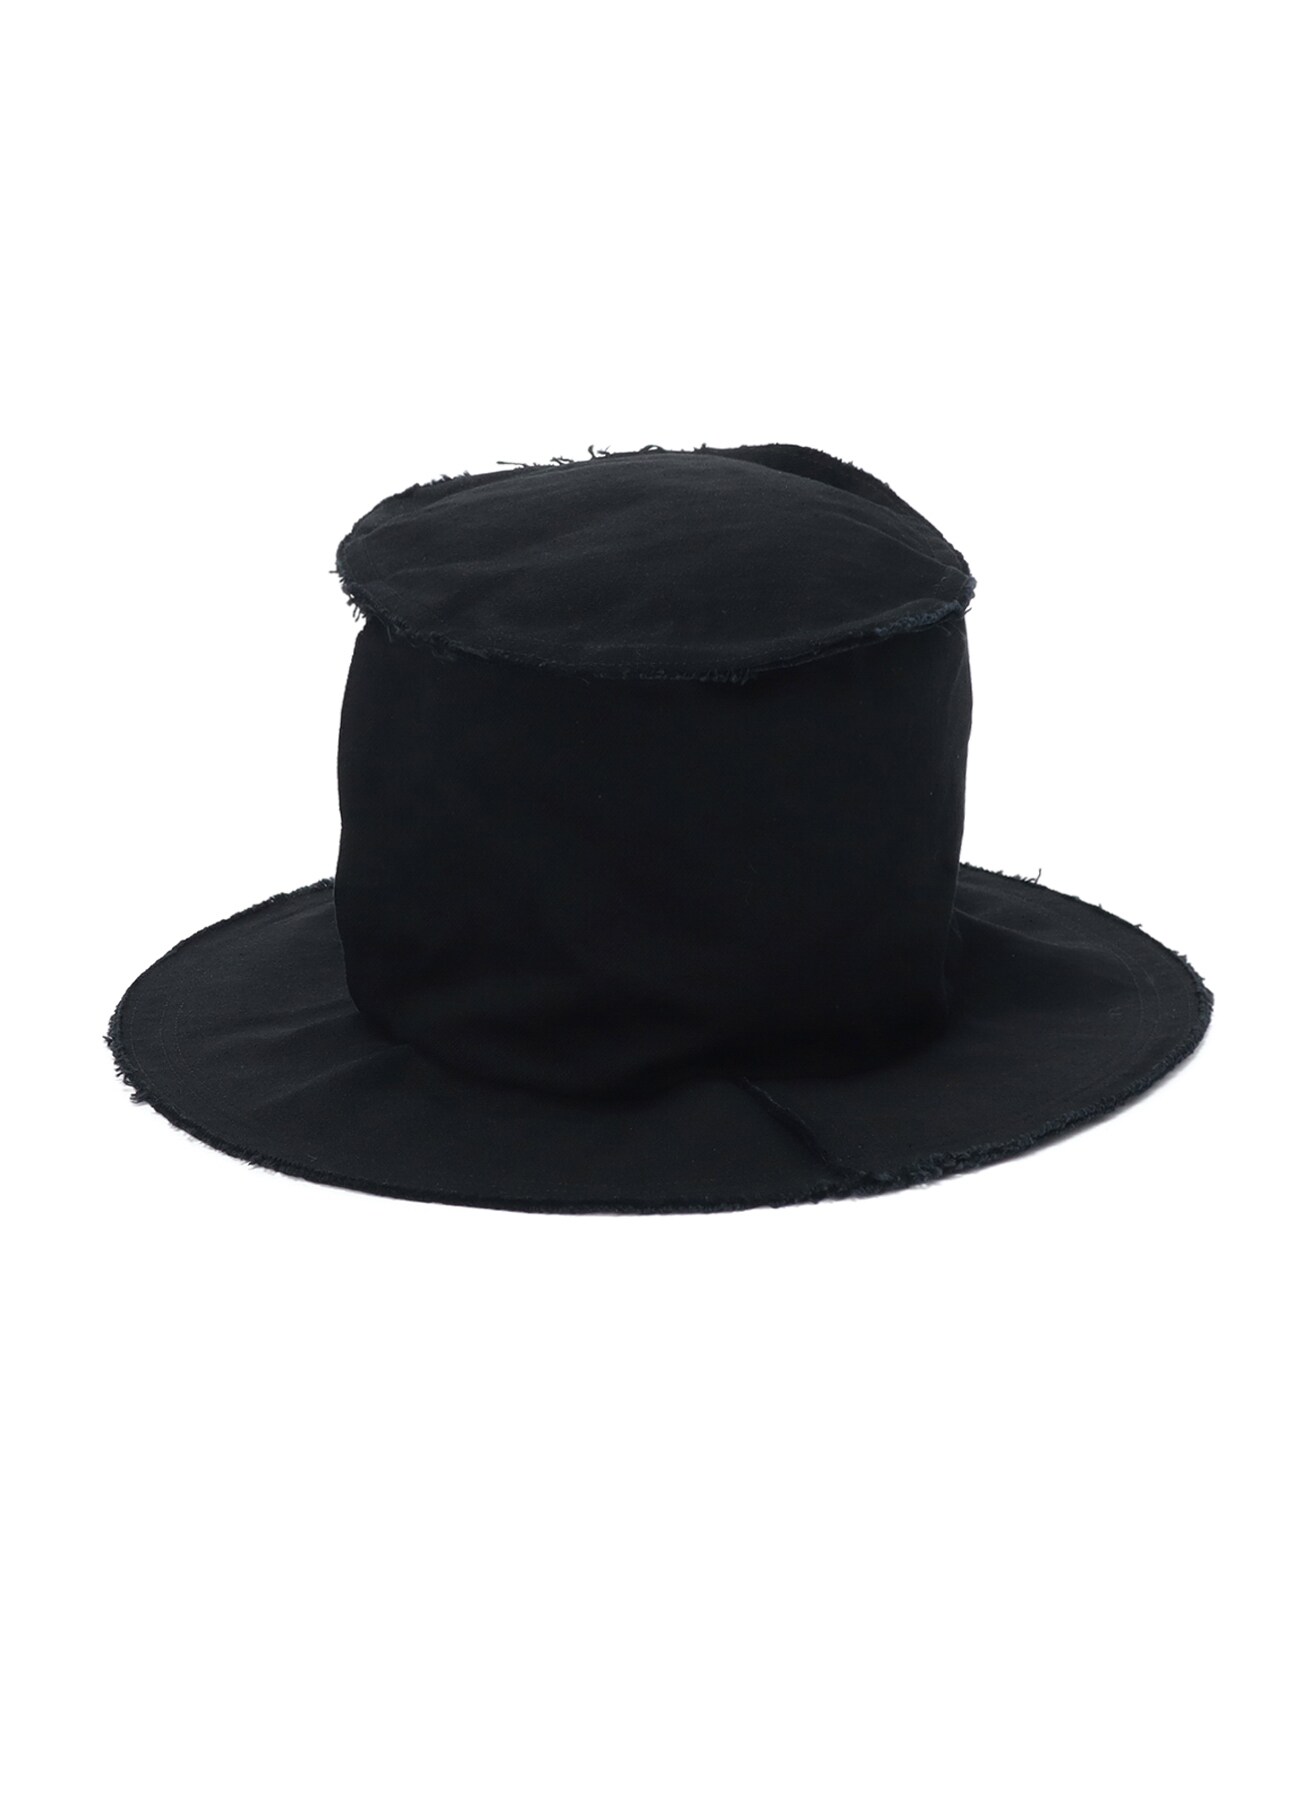 Black Denim Top Hat B